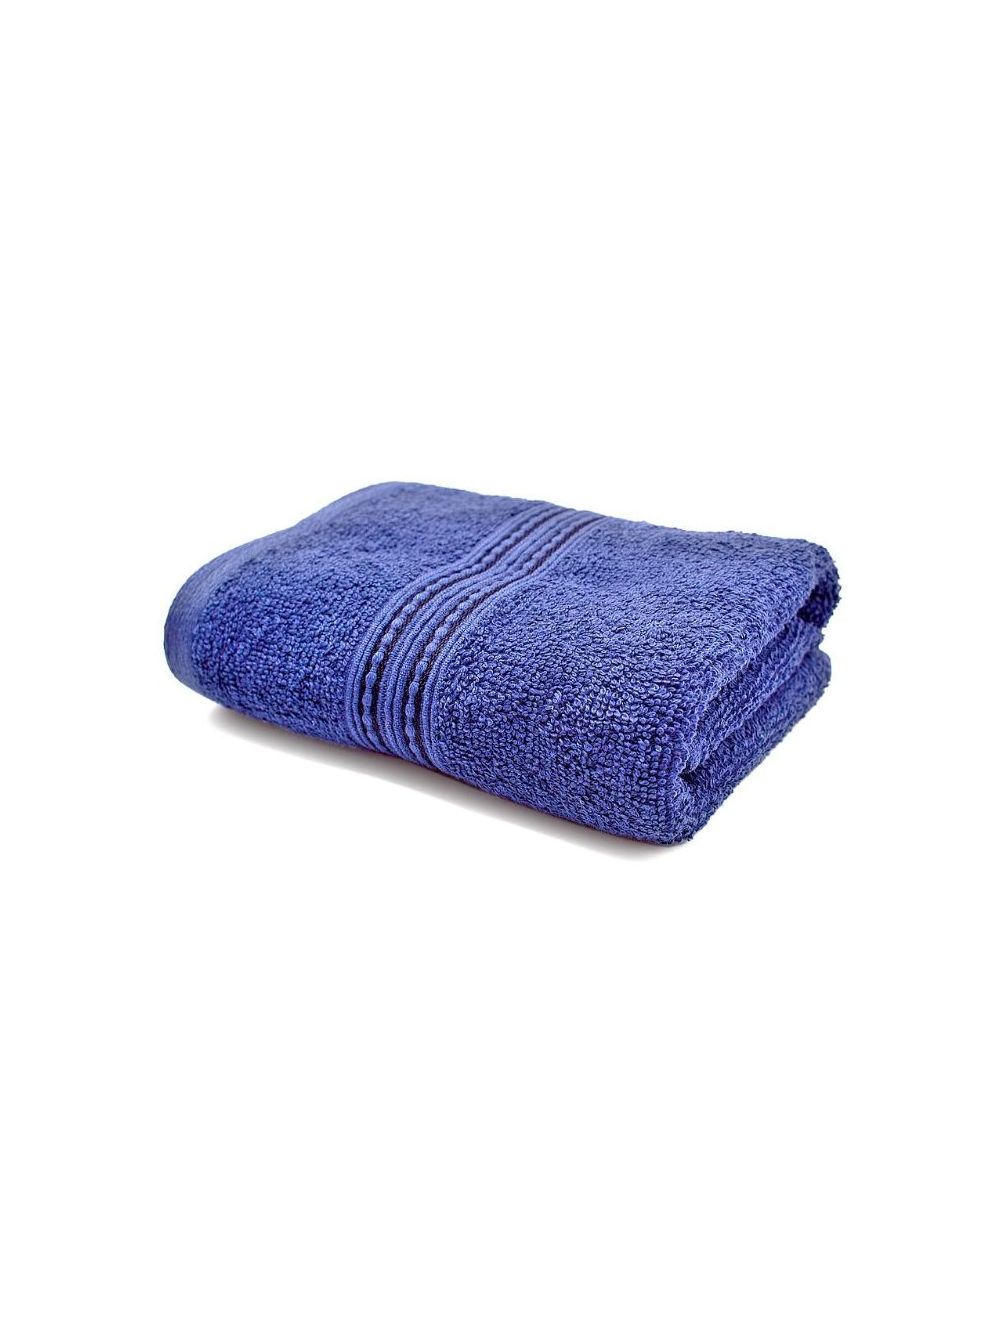 Rahalife 100% Cotton Hand Towel, Classic Collection, Blue-14RLHT018